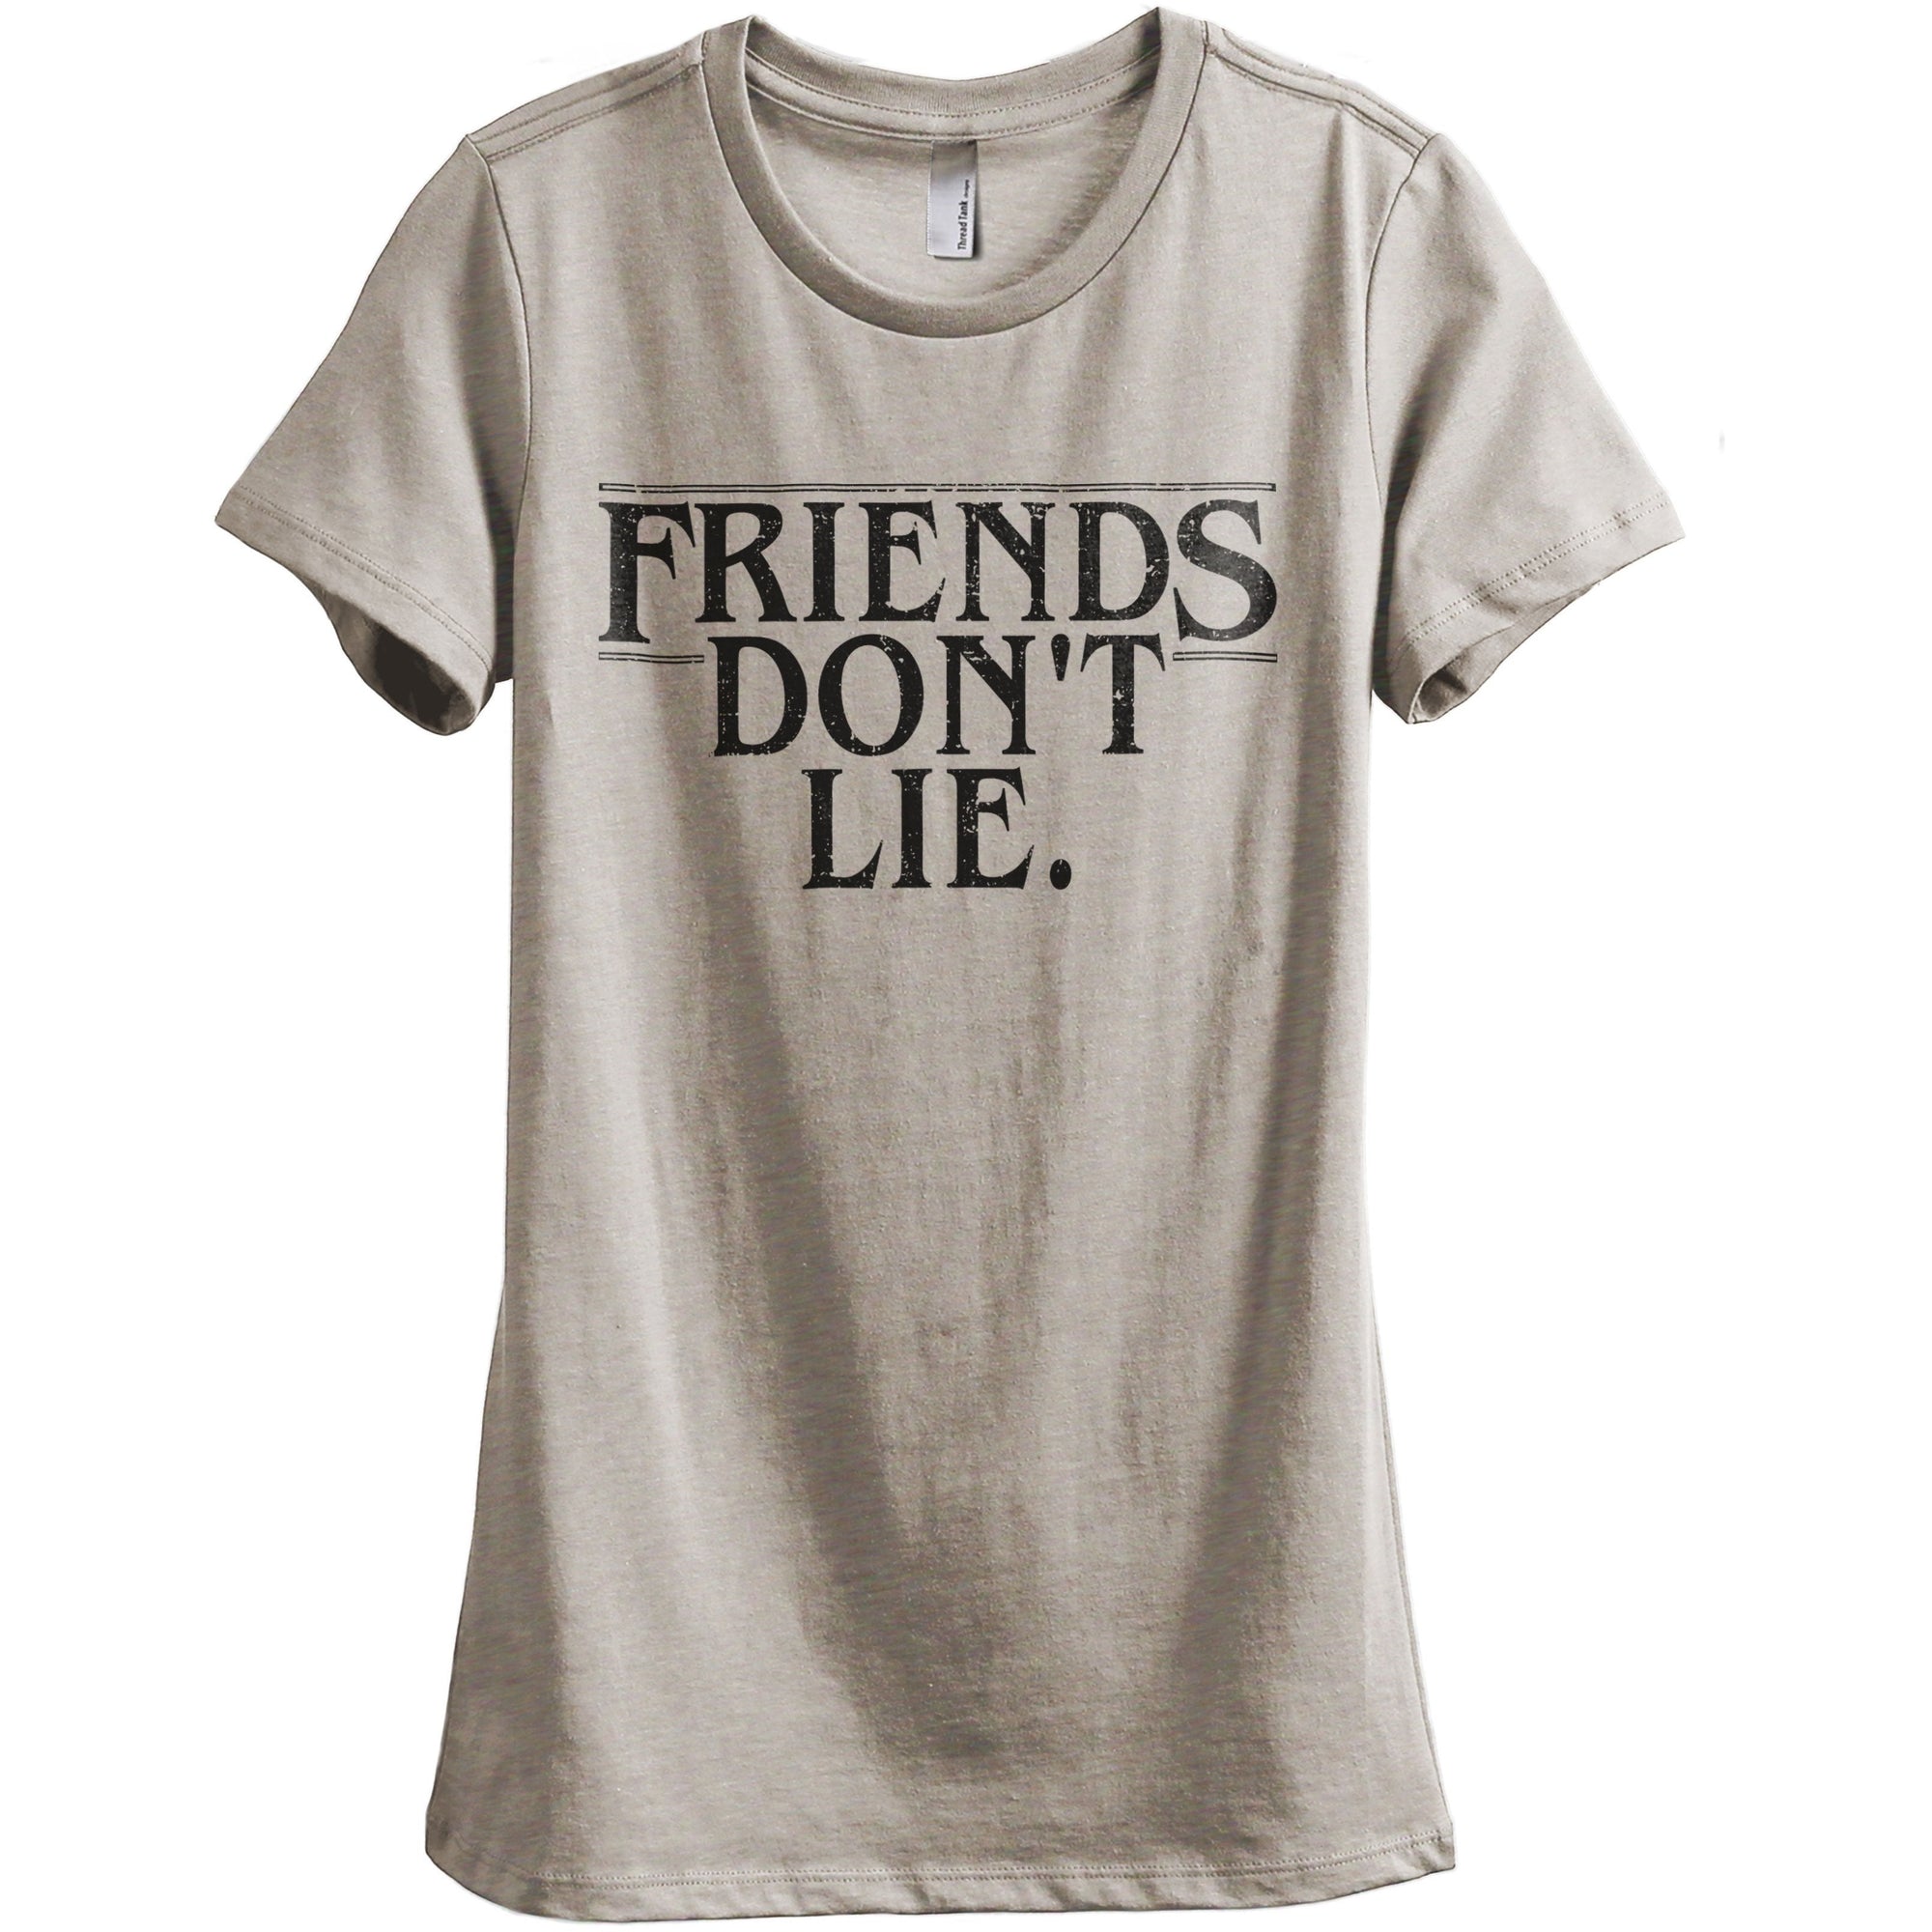 Friends Don't Lie - thread tank | Stories you can wear.